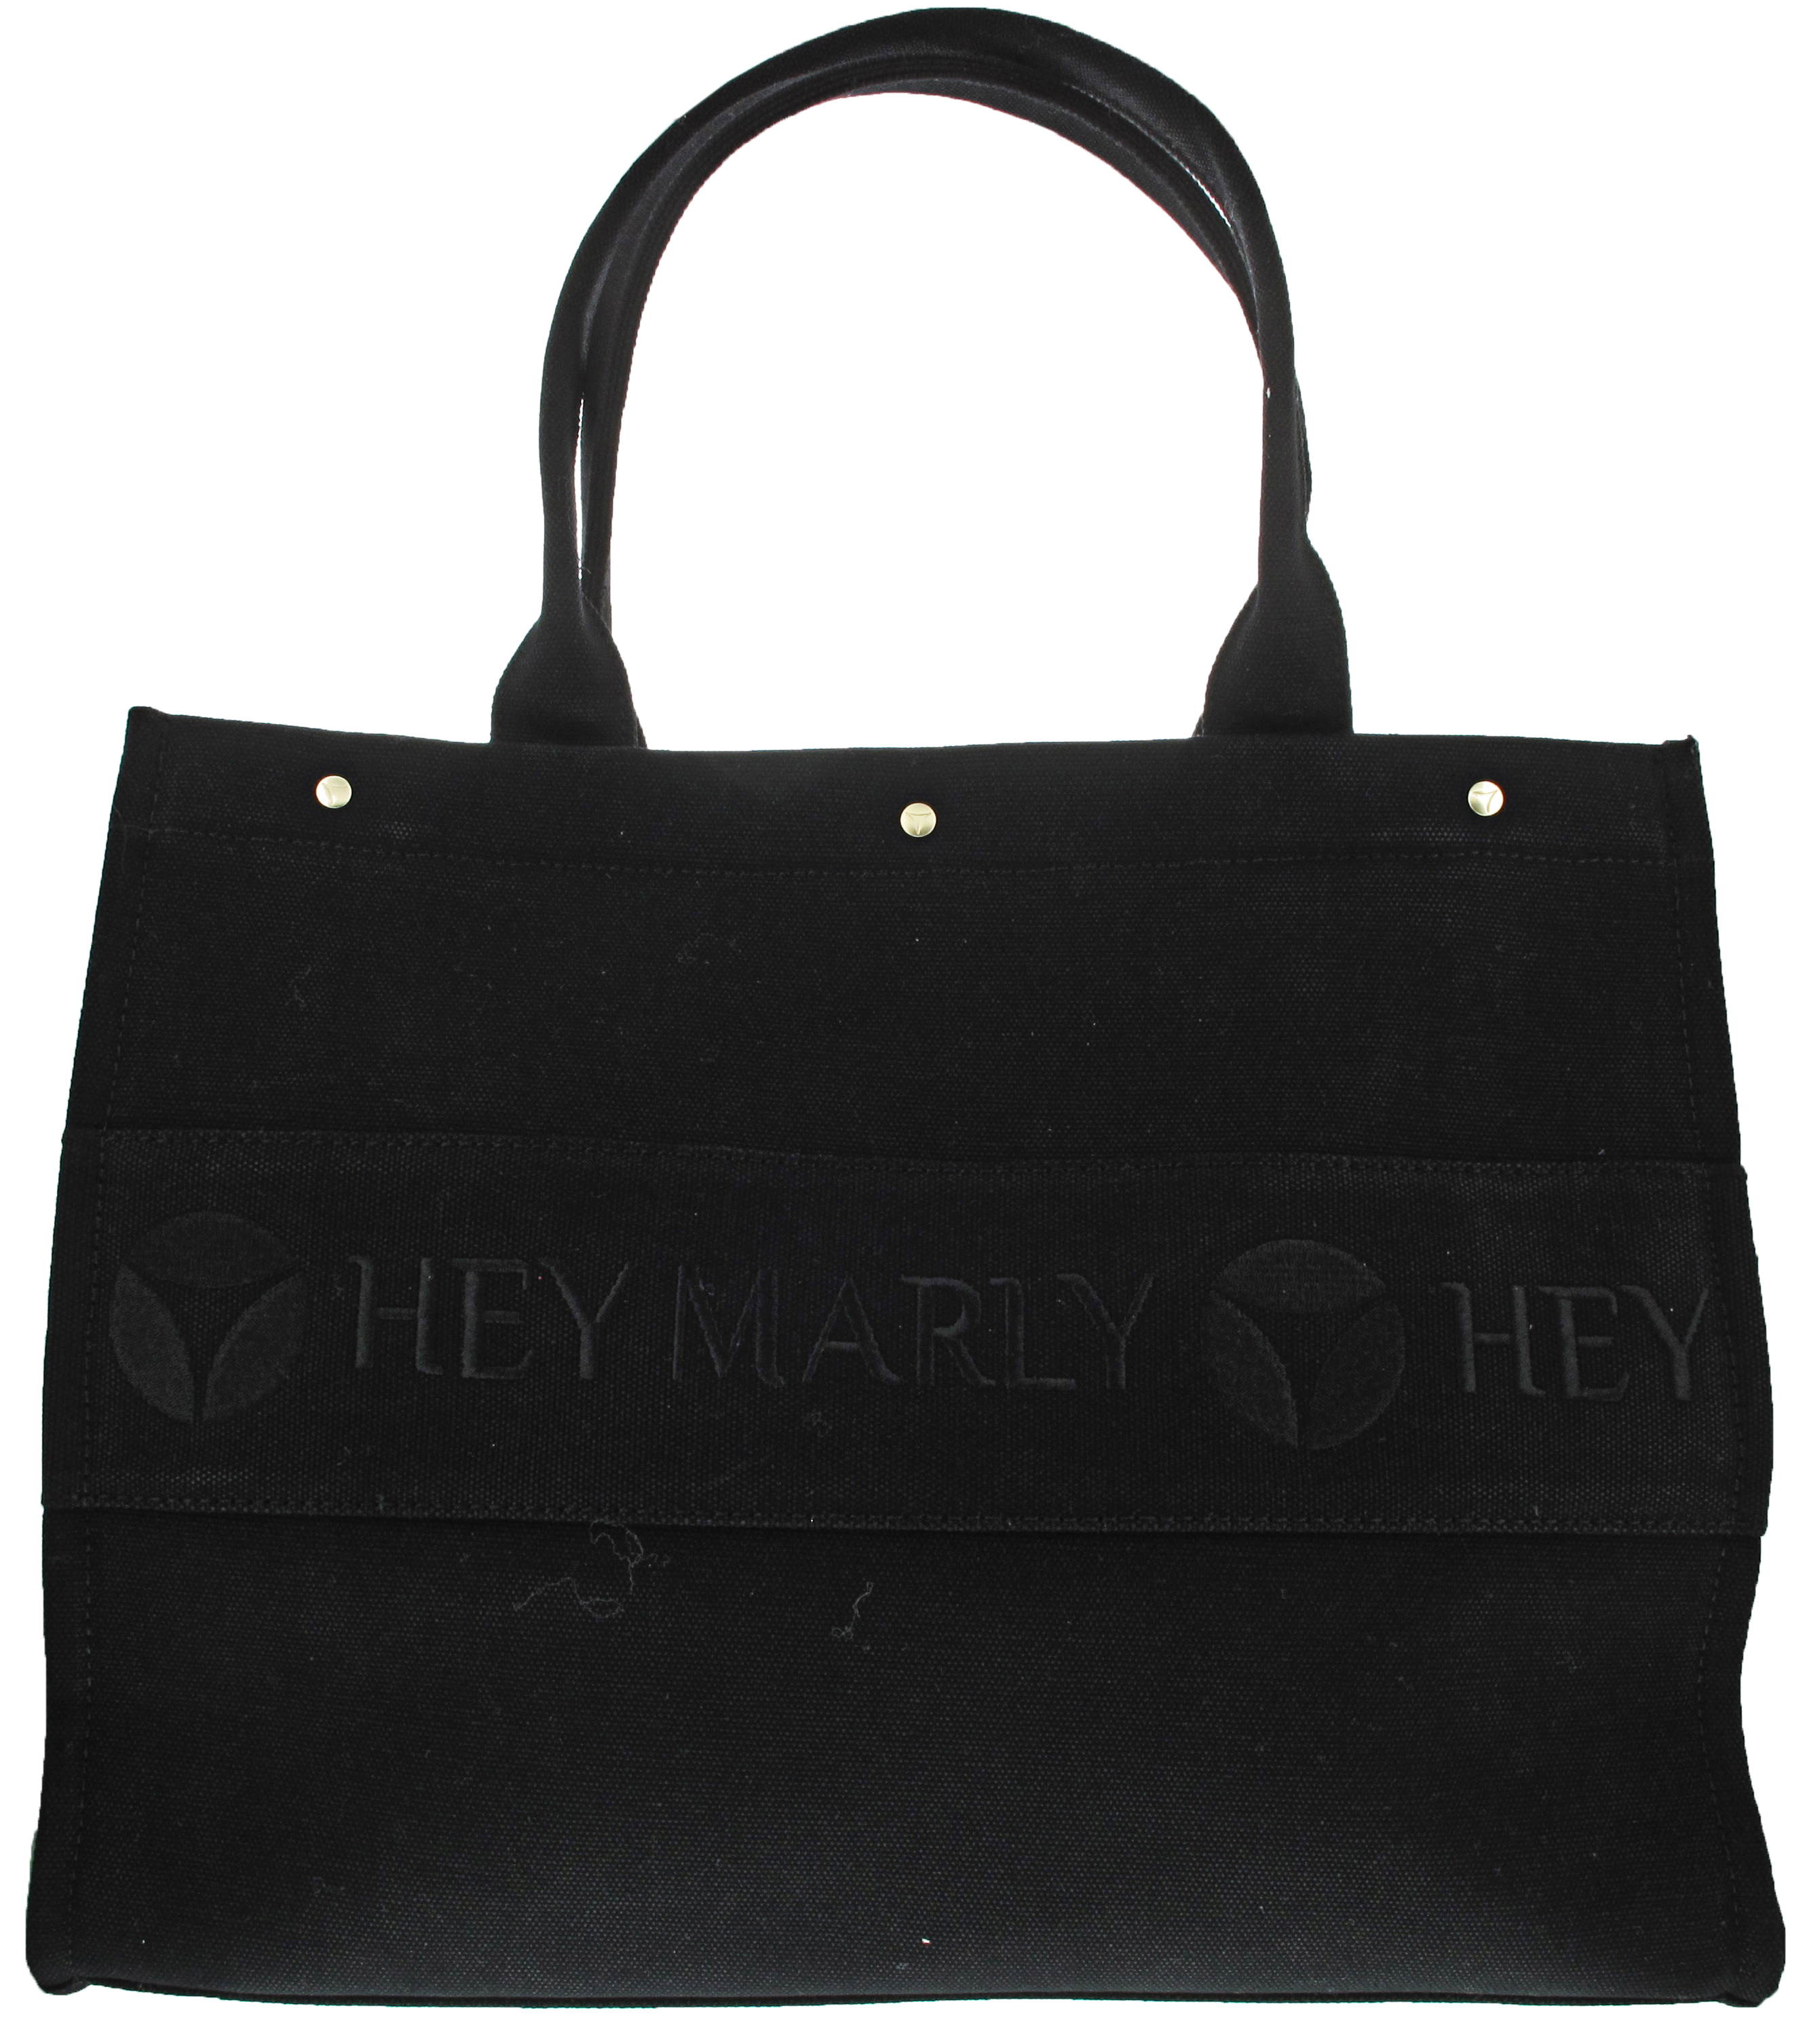 Hey Marly Signature Bag